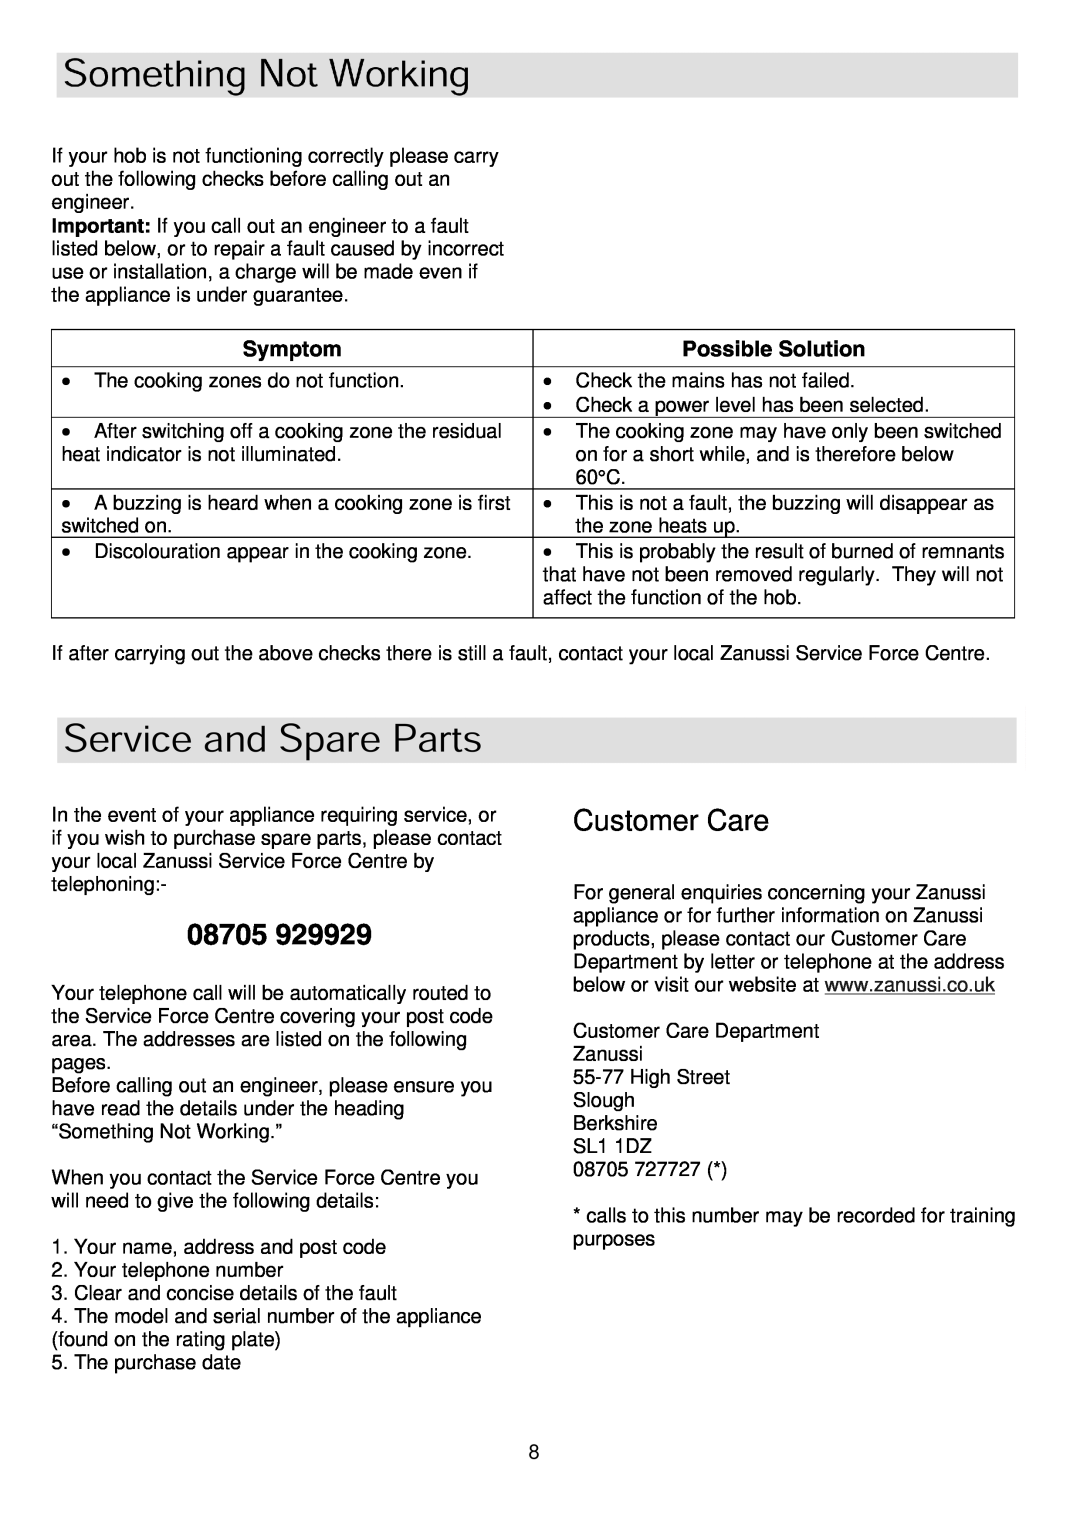 Zanussi ZKF641H manual 08705, Customer Care, Symptom, Possible Solution 